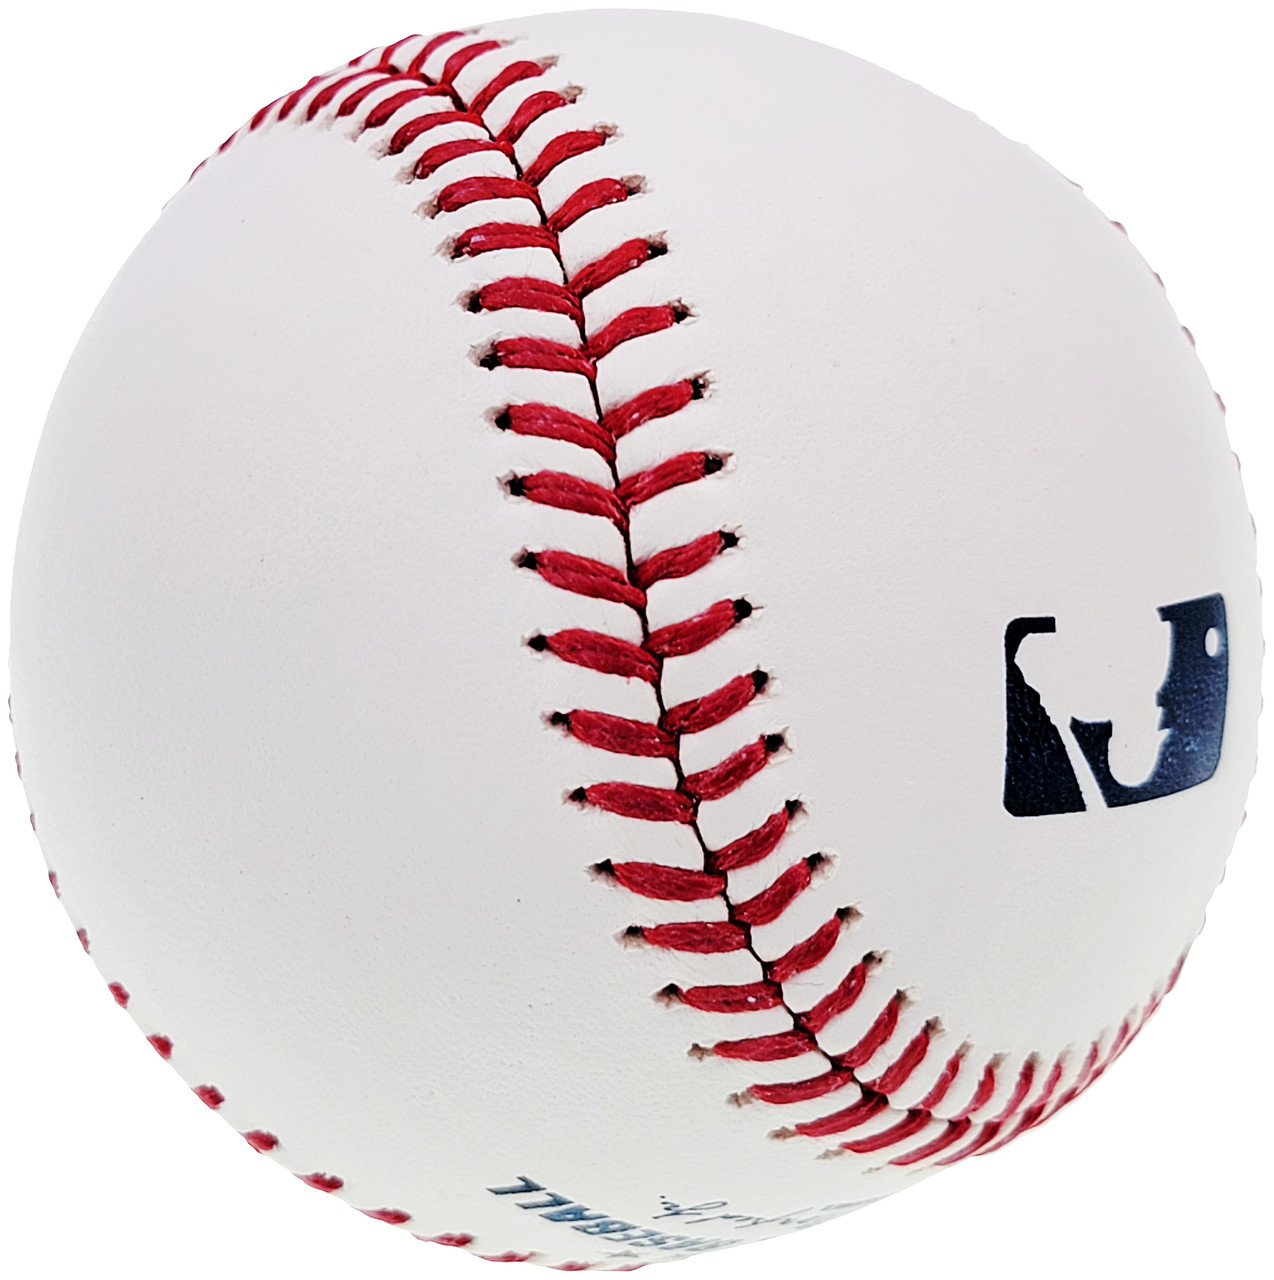 Manny Ramirez Autographed MLB Baseball